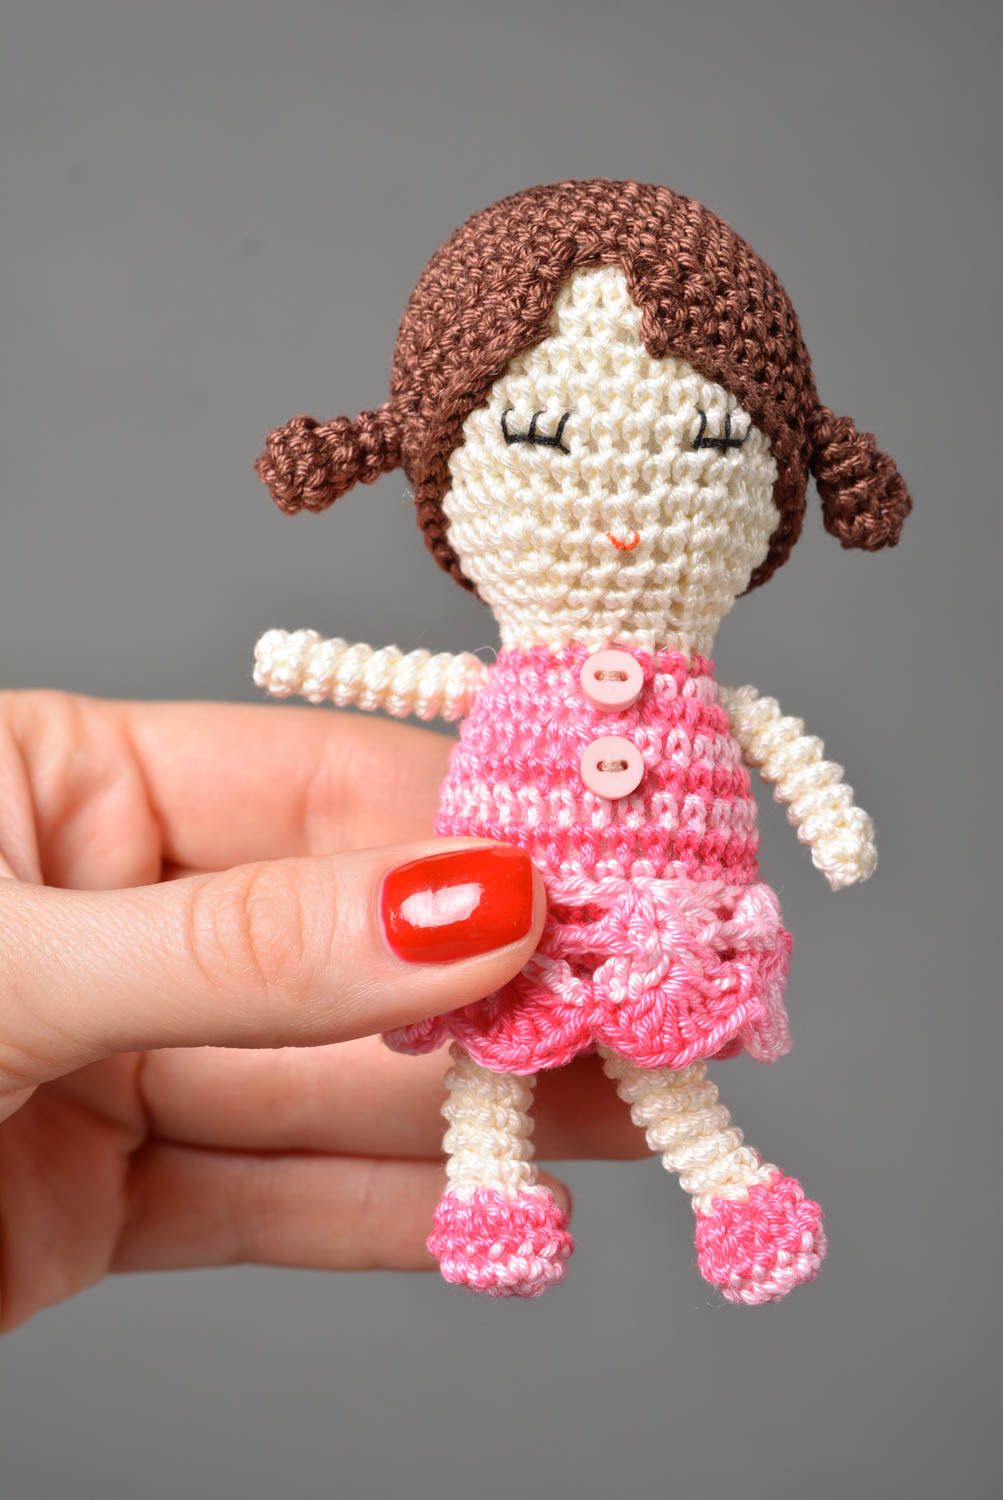 Beautiful handmade stuffed soft toy cute toys crochet toy birthday gift ideas photo 3